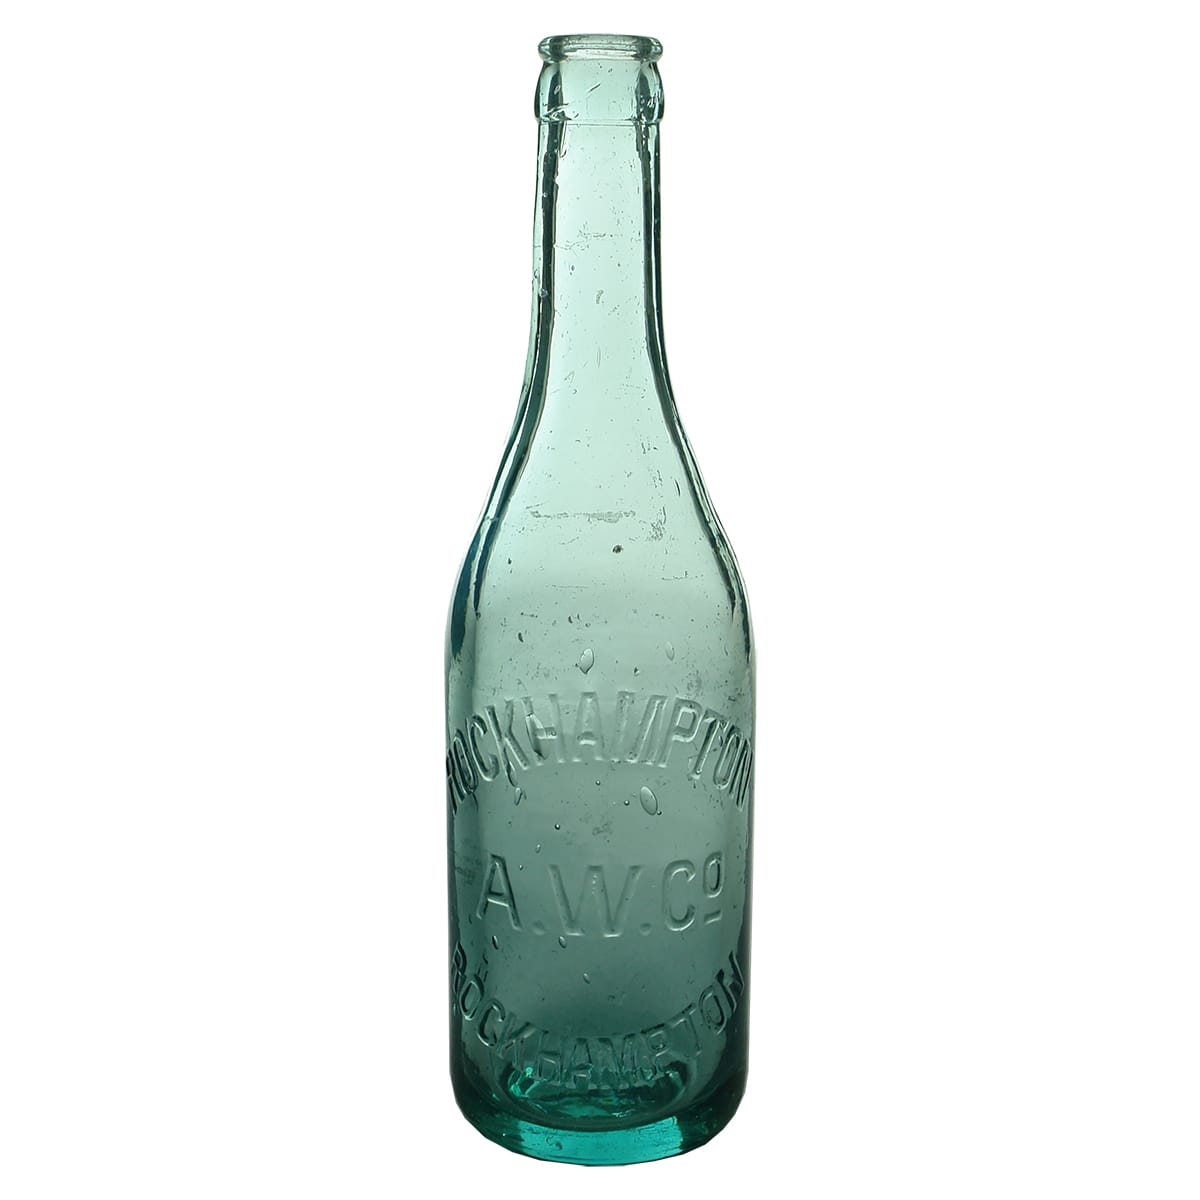 Crown Seal. Rockhampton Aerated Water Co. Champagne. Spun Top. Aqua. 10 oz. (Queensland)